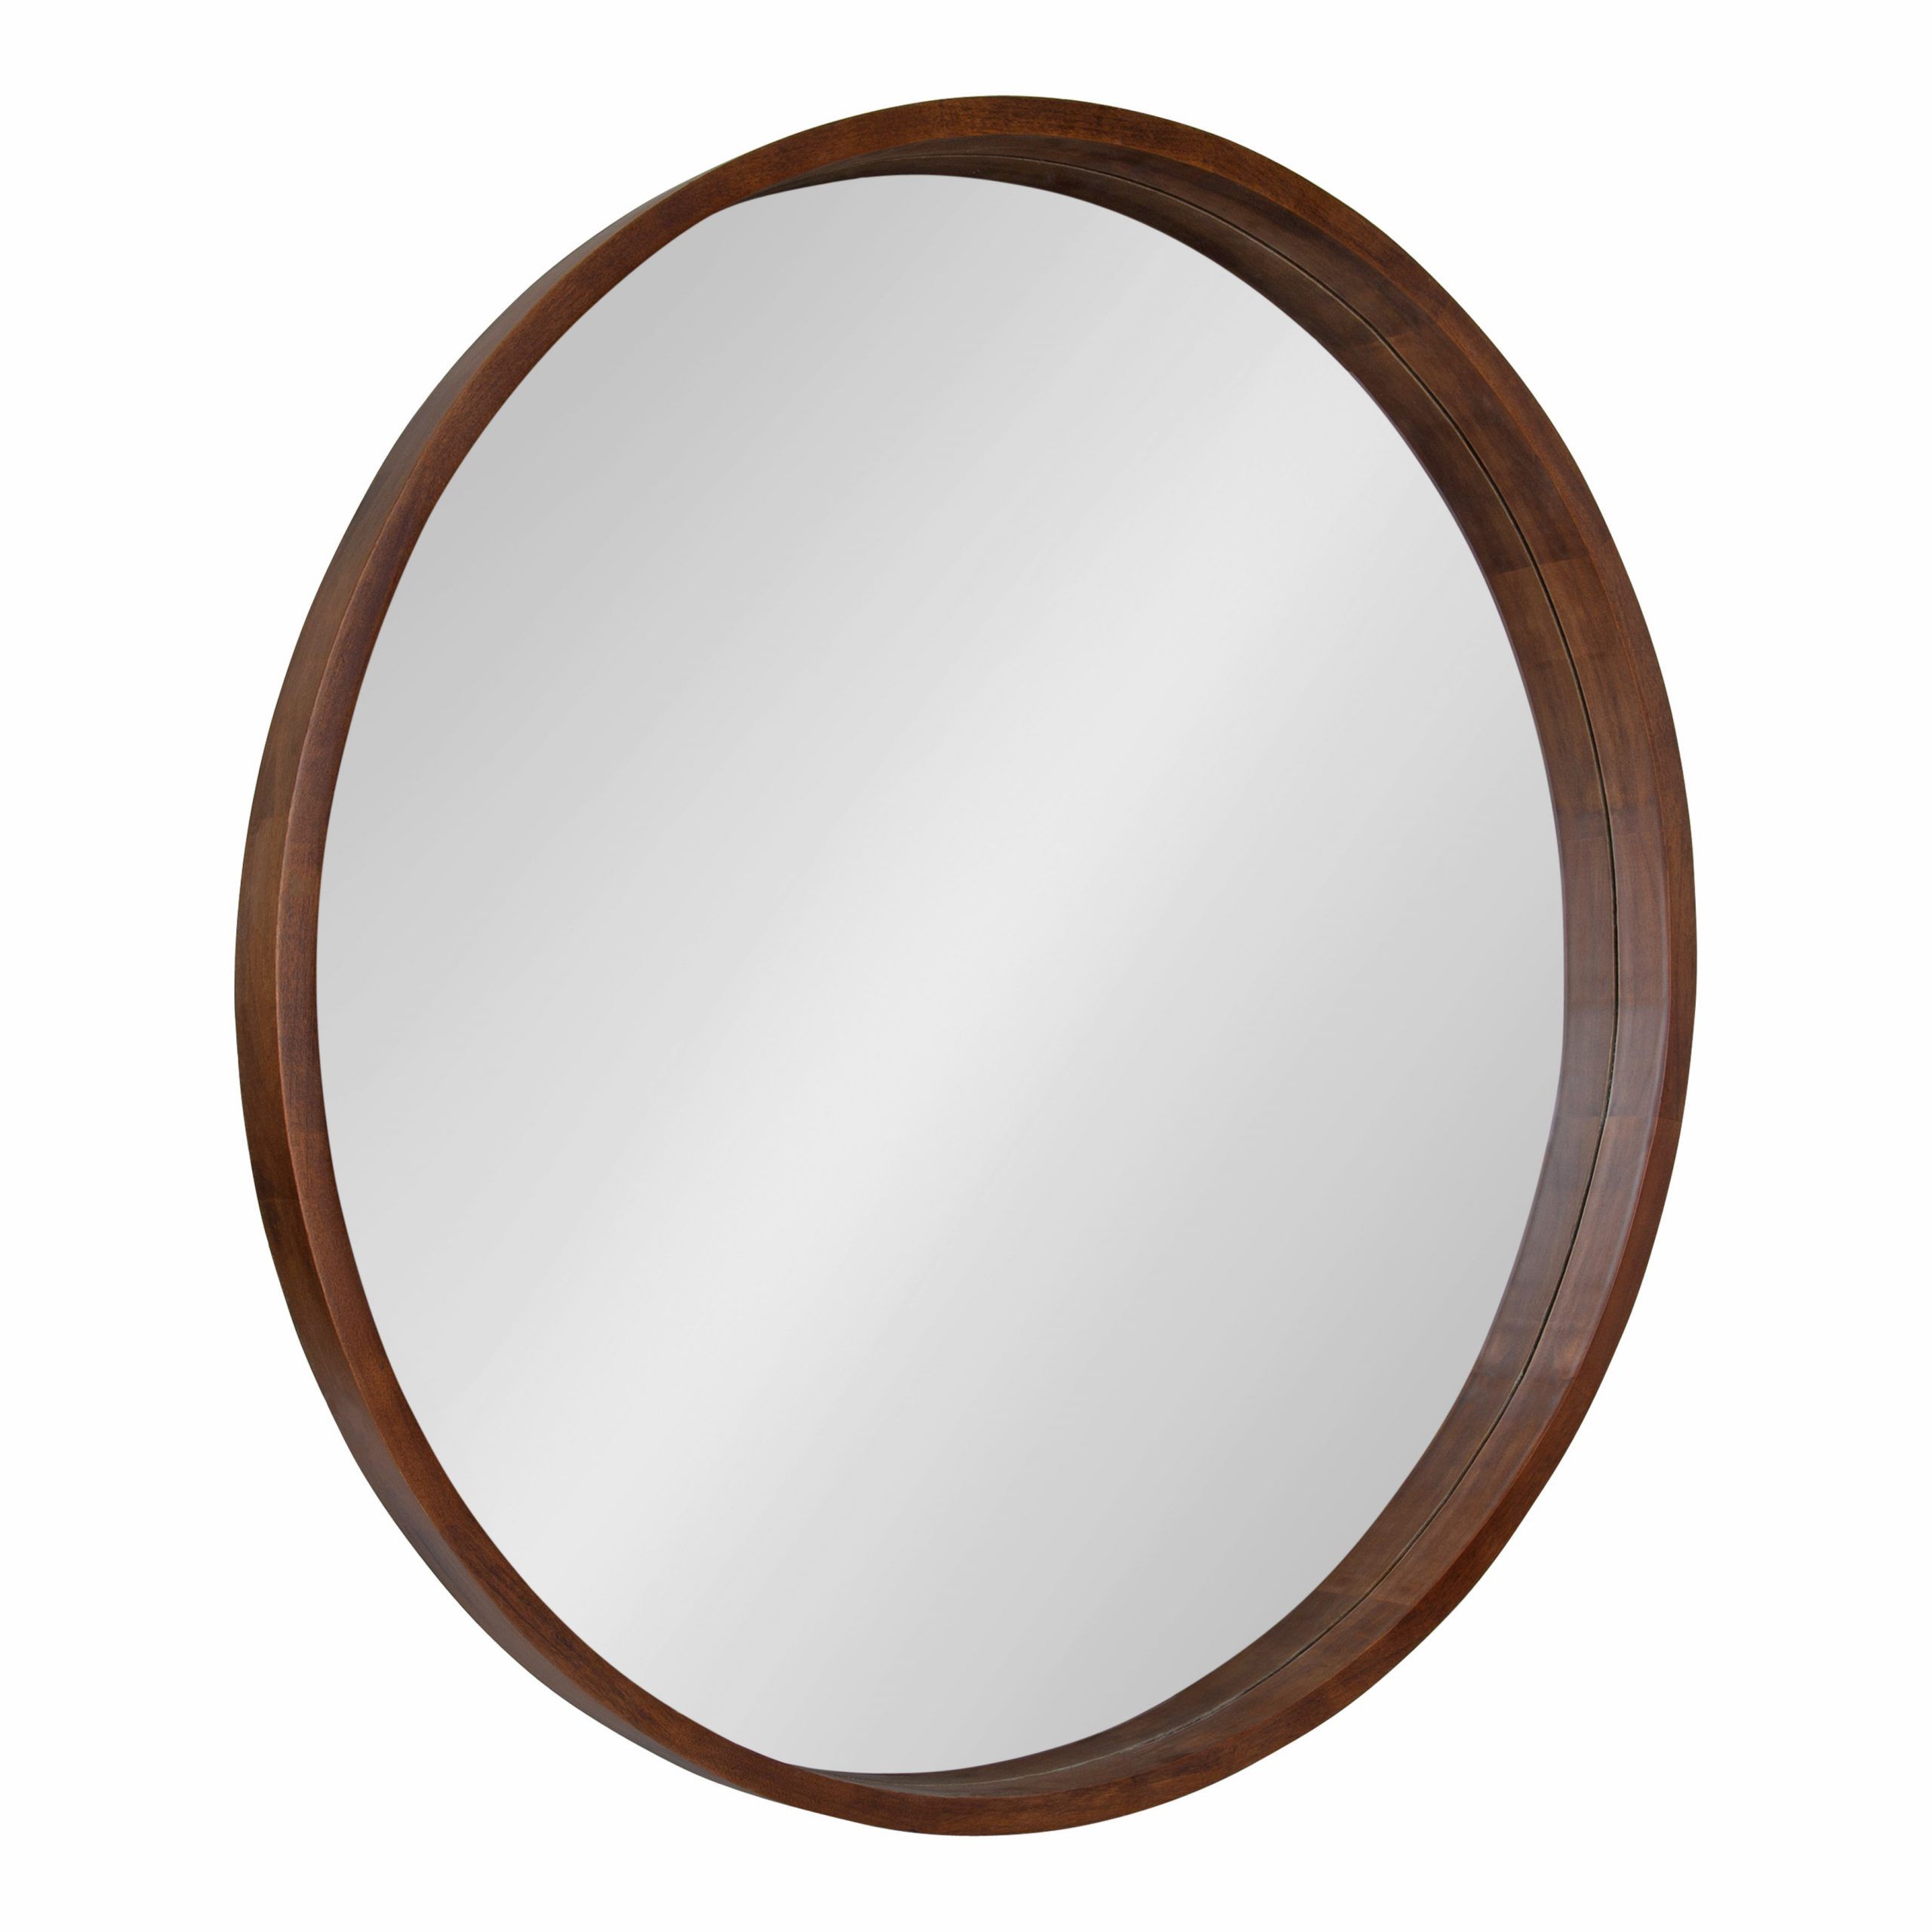 Kate And Laurel Hutton Round Wood Wall Mirror, 36" Diameter, Walnut Regarding Walnut Wood Wall Mirrors (View 8 of 15)